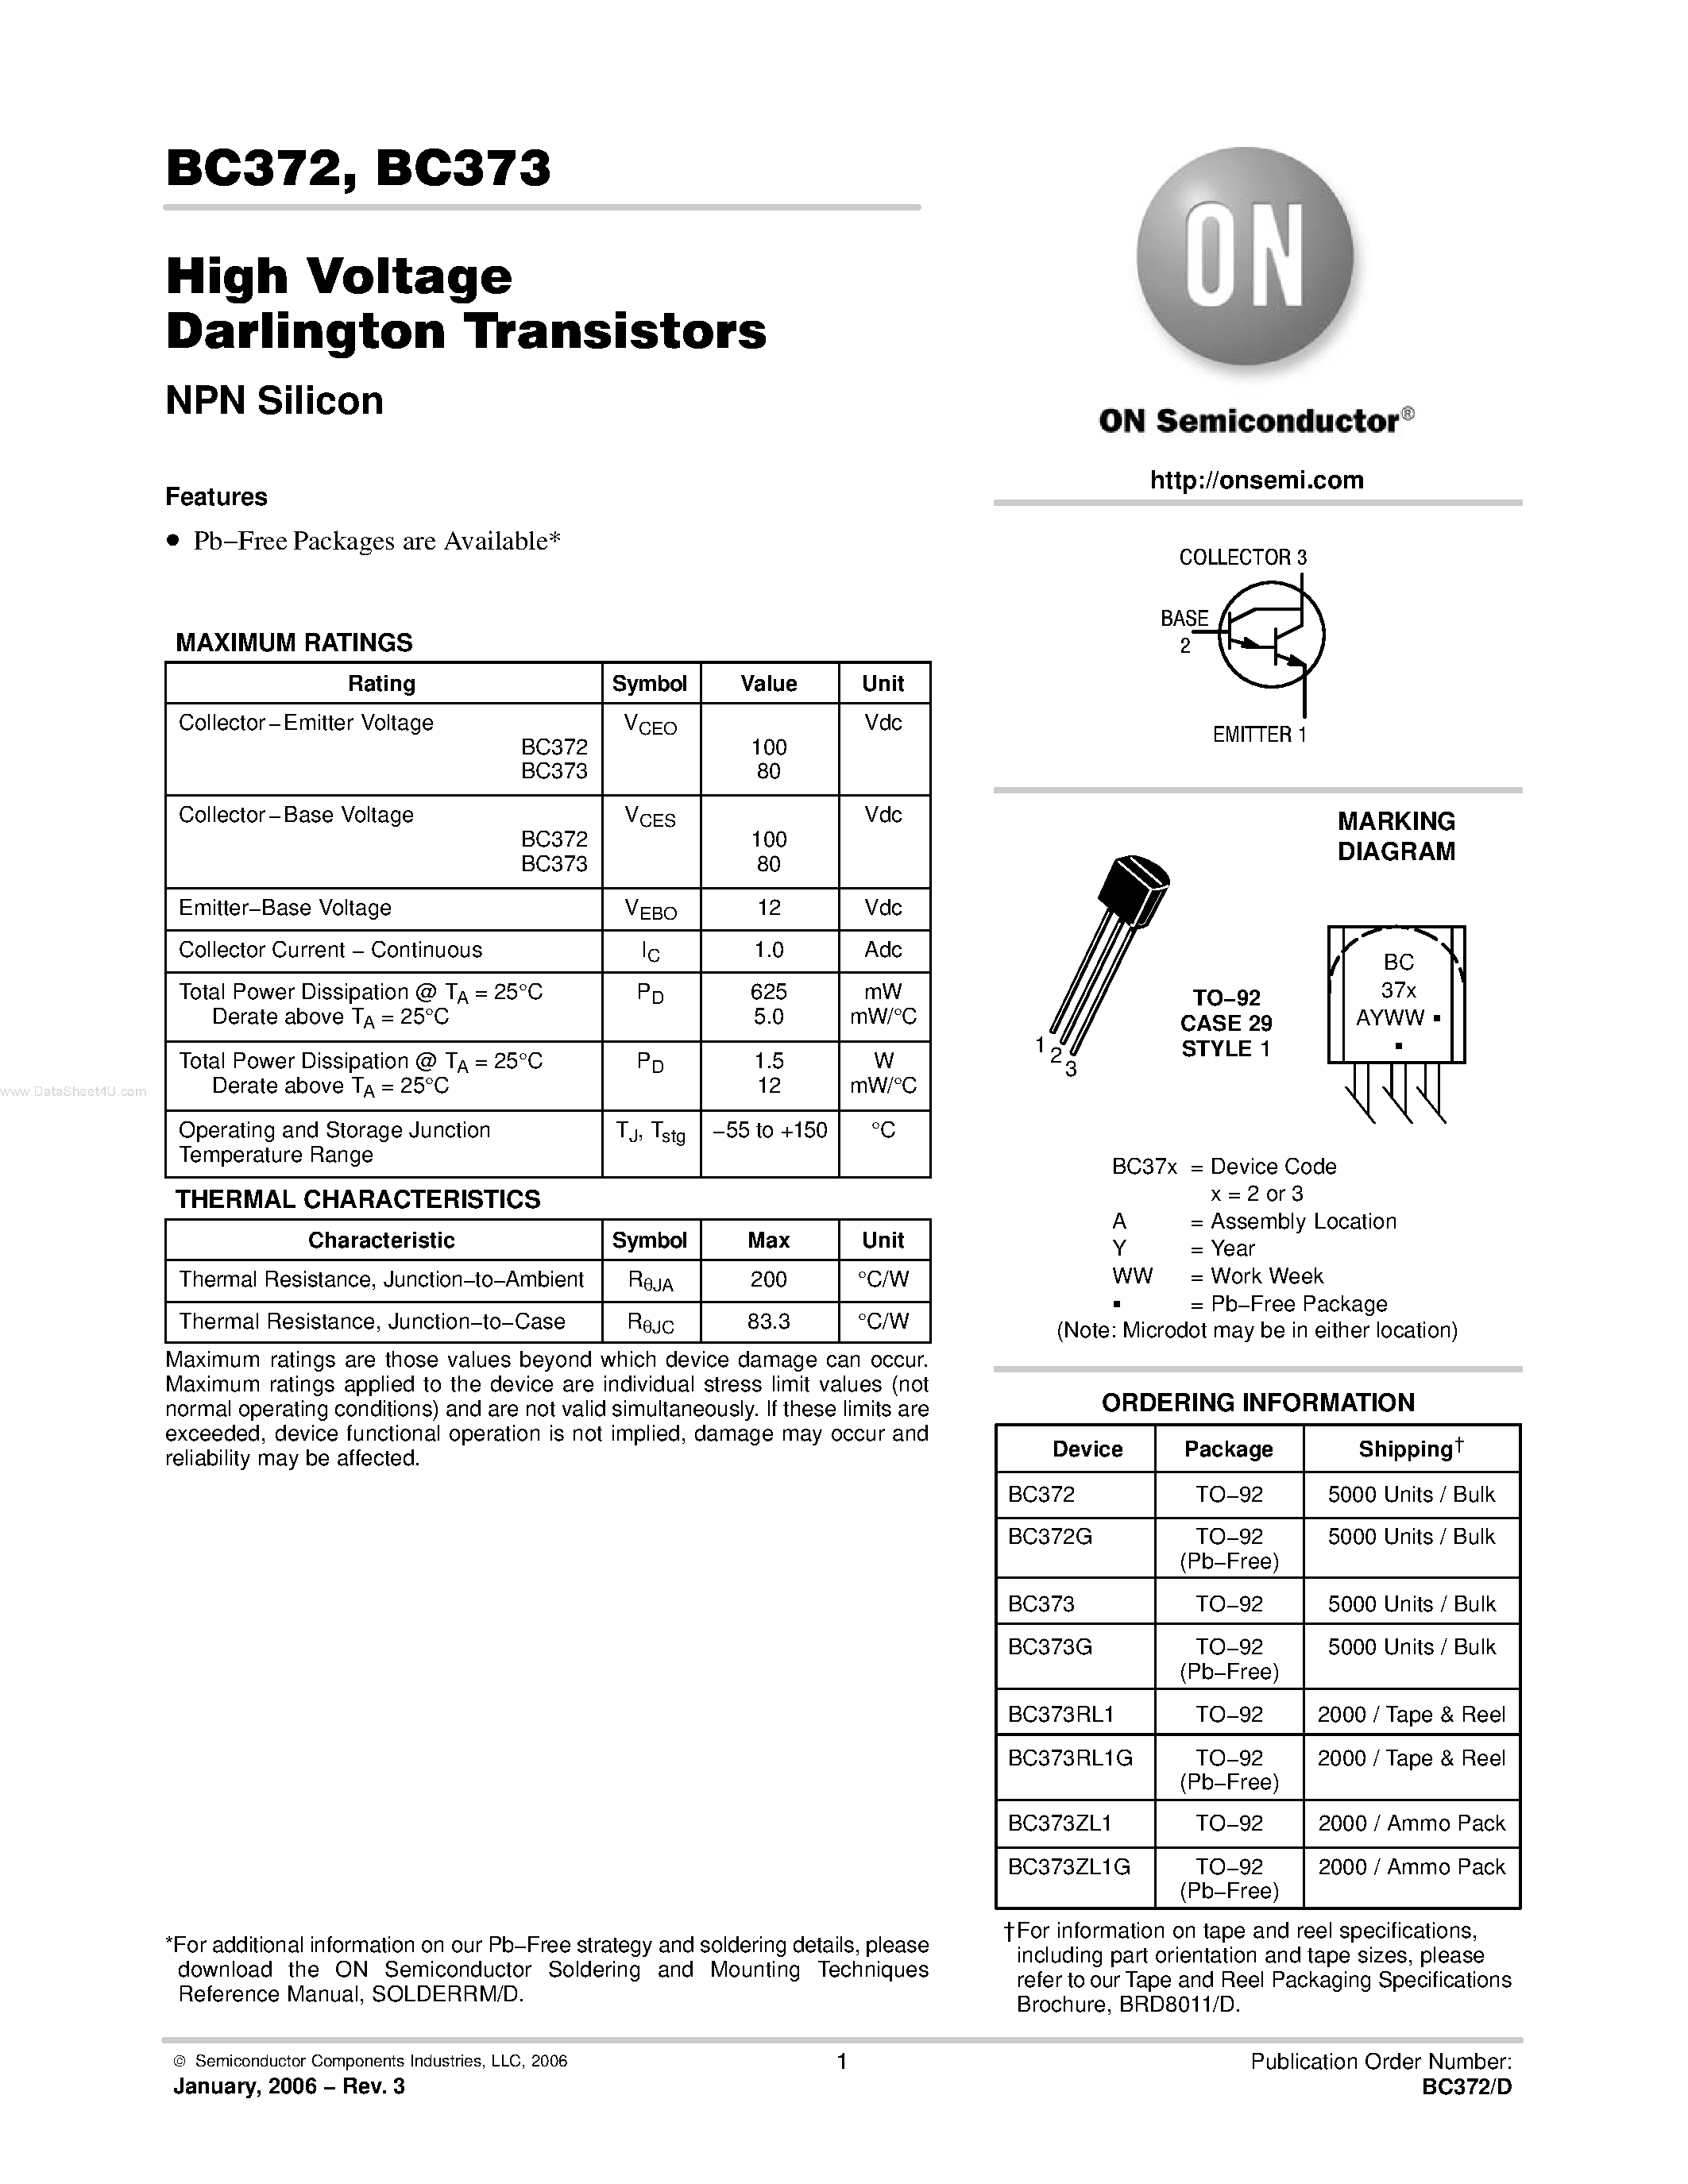 Даташит BC372 - High Voltage Darlington Transistors(NPN Silicon) страница 1